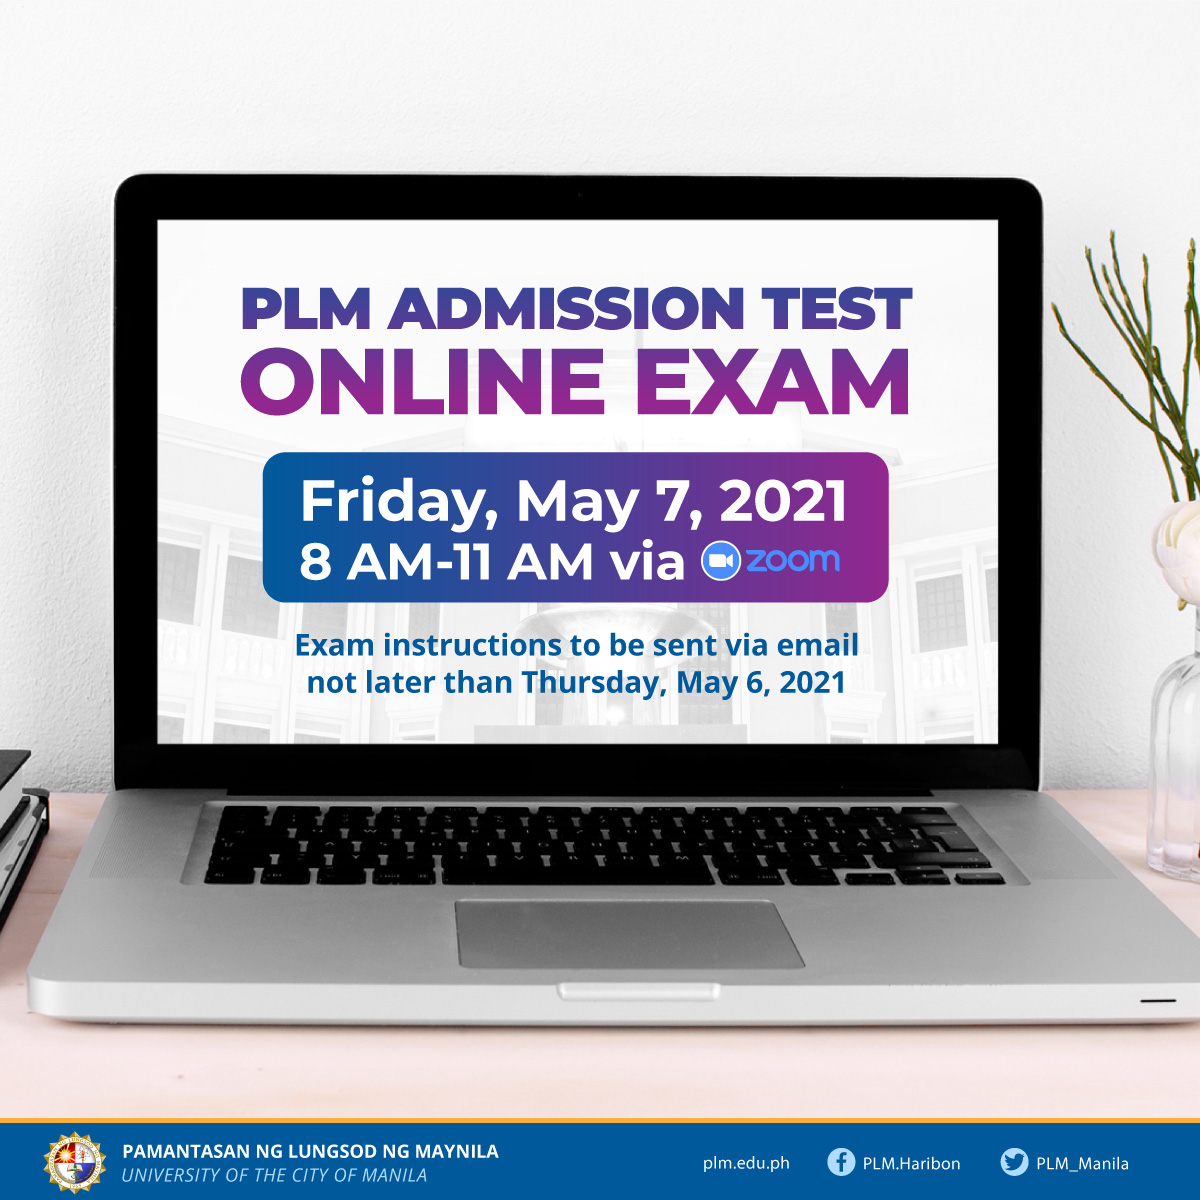 Advisory on PLMAT online exam on May 7, 2021